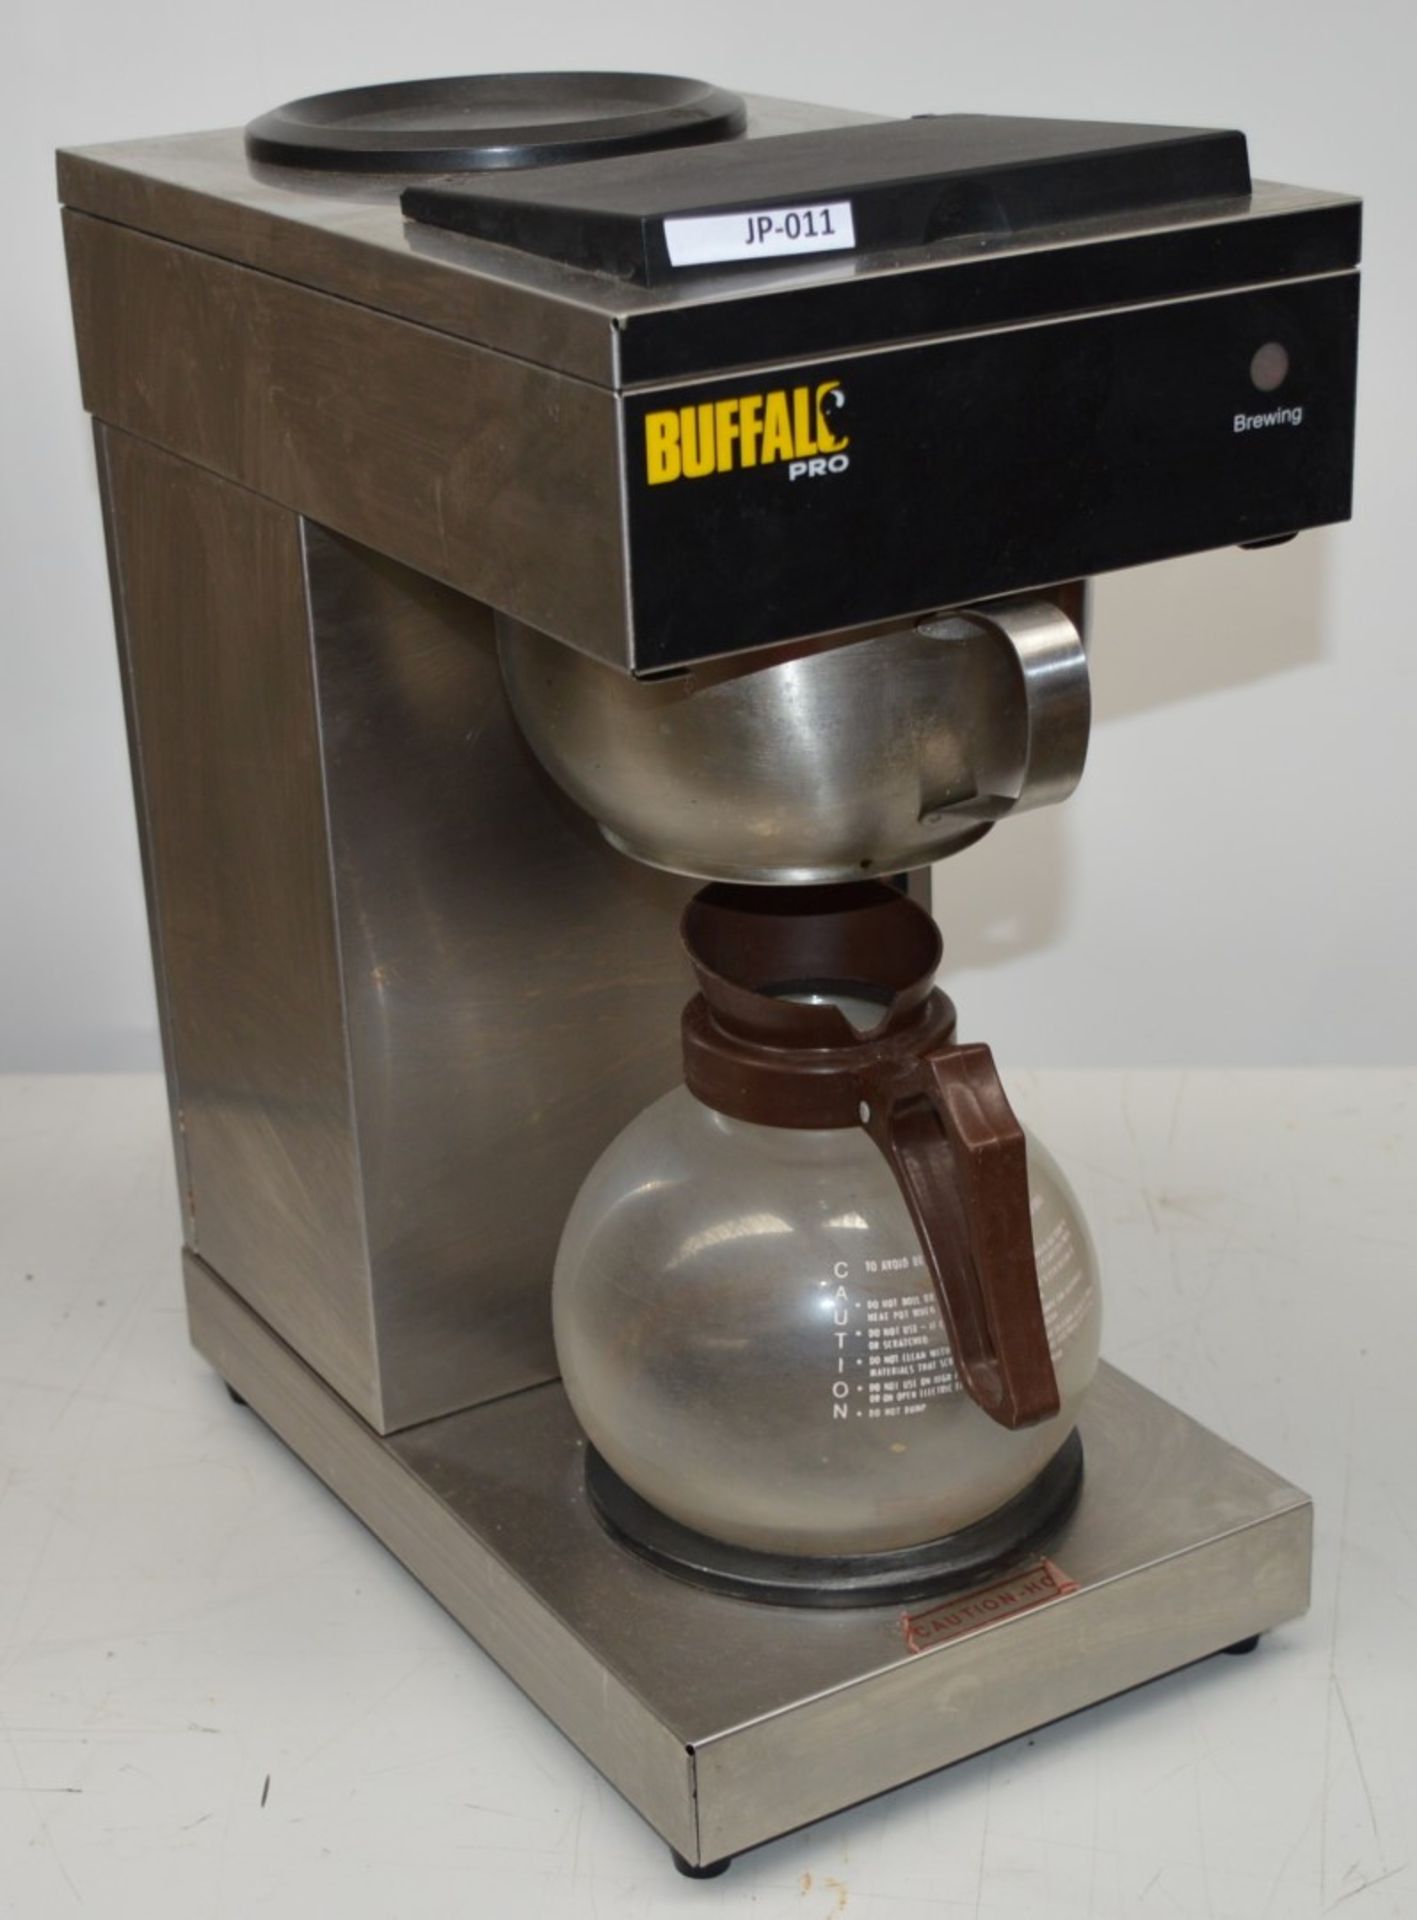 1 x Buffalo Coffee Machine - Includes 1.8 Litre Glass Jug - Model L378 - CL188 - Ref JP011 -